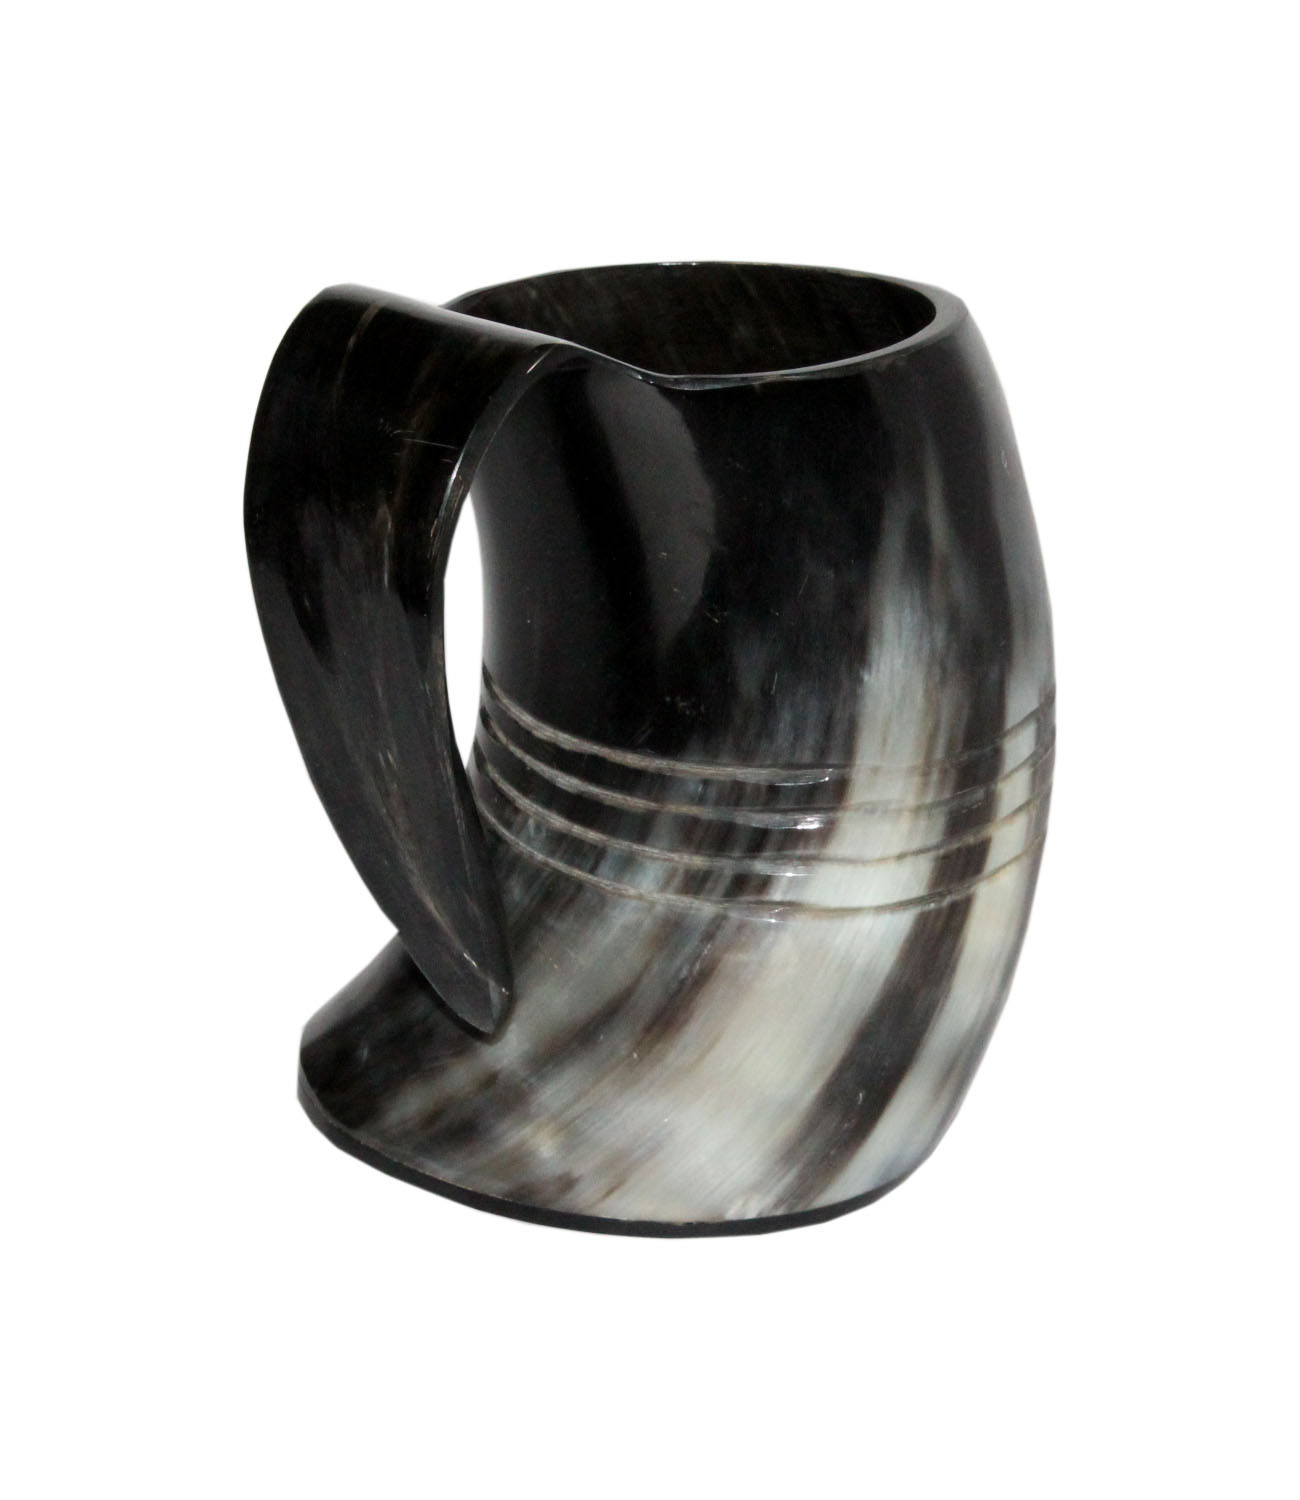 Details about   Designed Viking Drinking Horn Cup-Mug Chalice For Beer Wine Mead Vintage Gift 